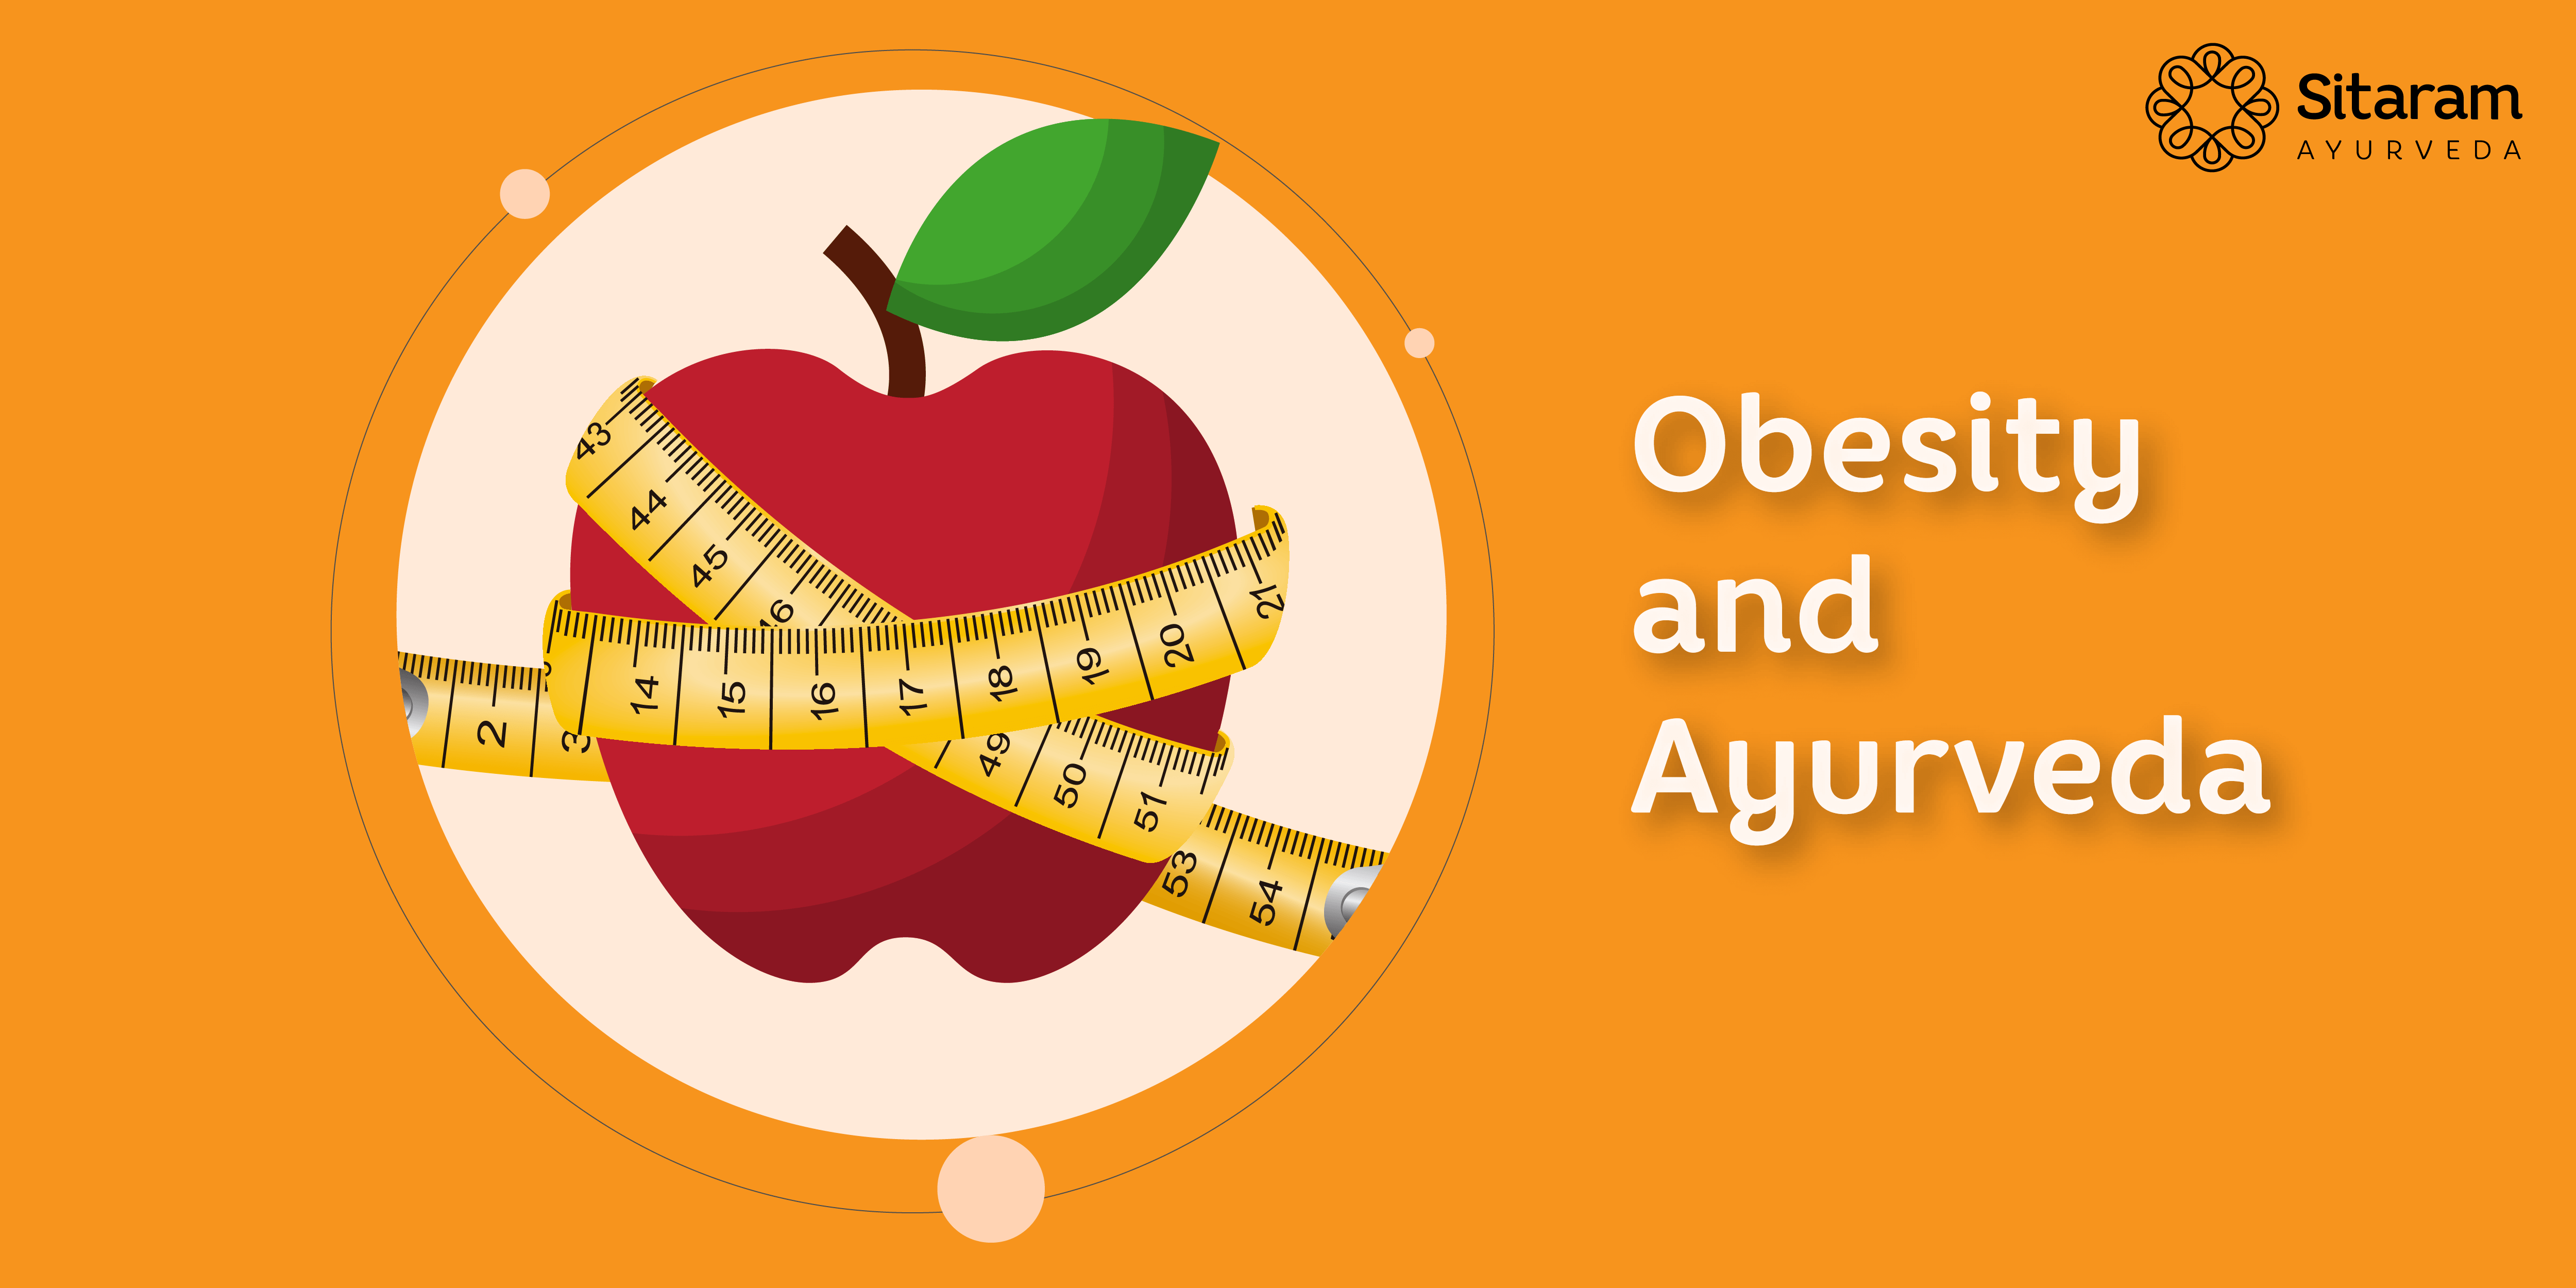 Obesity and Ayurveda